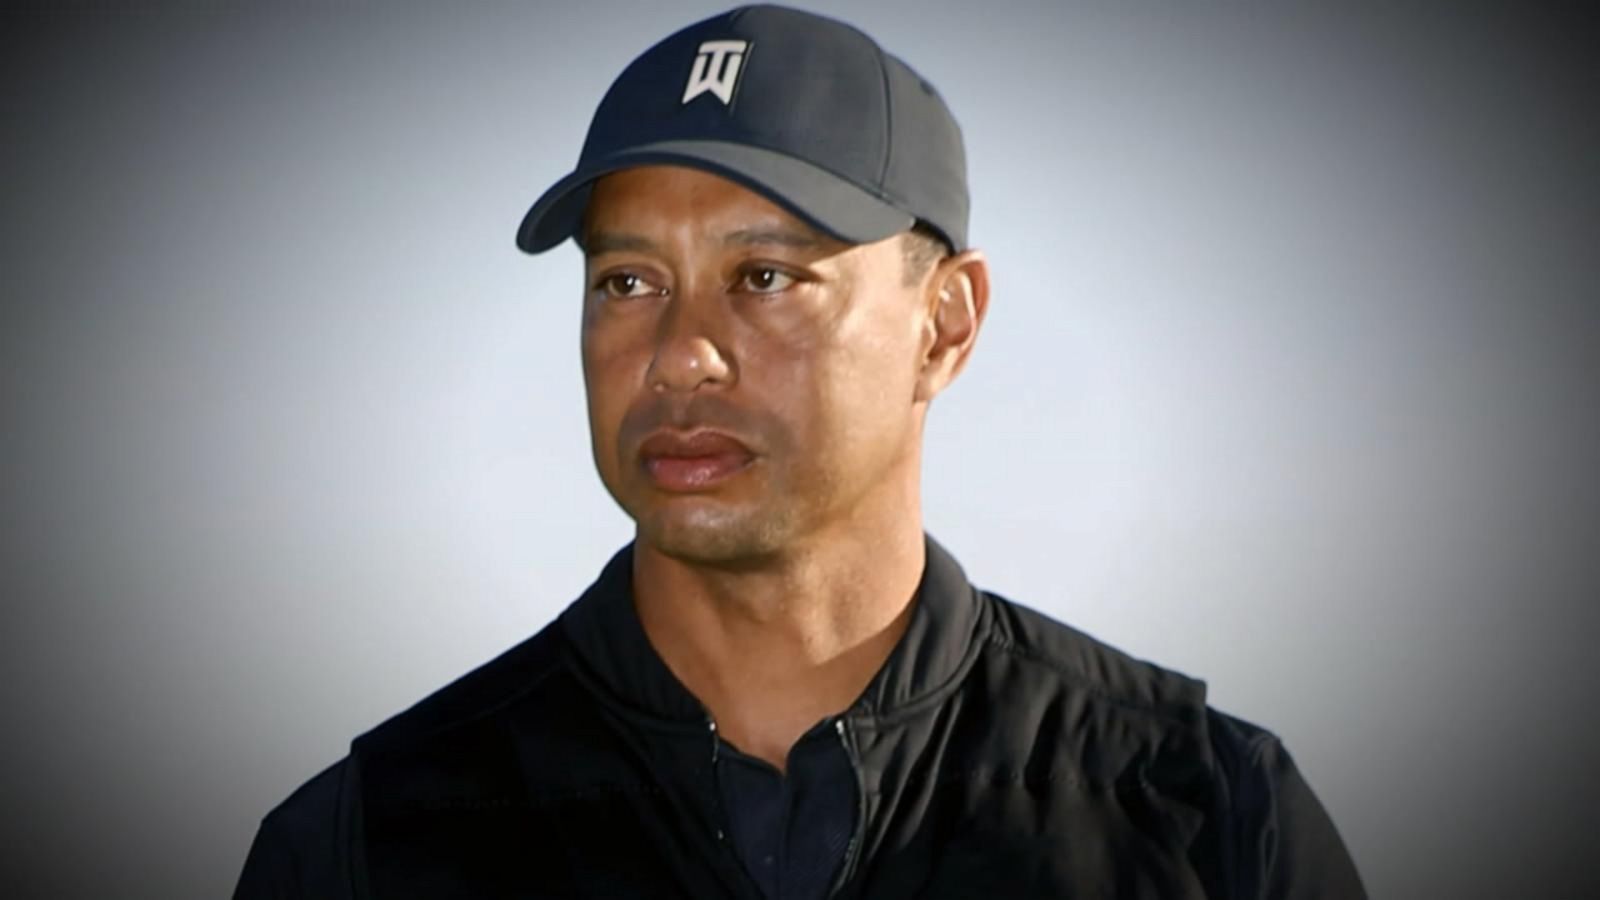 Tiger Woods breaks silence after crash - Good Morning America